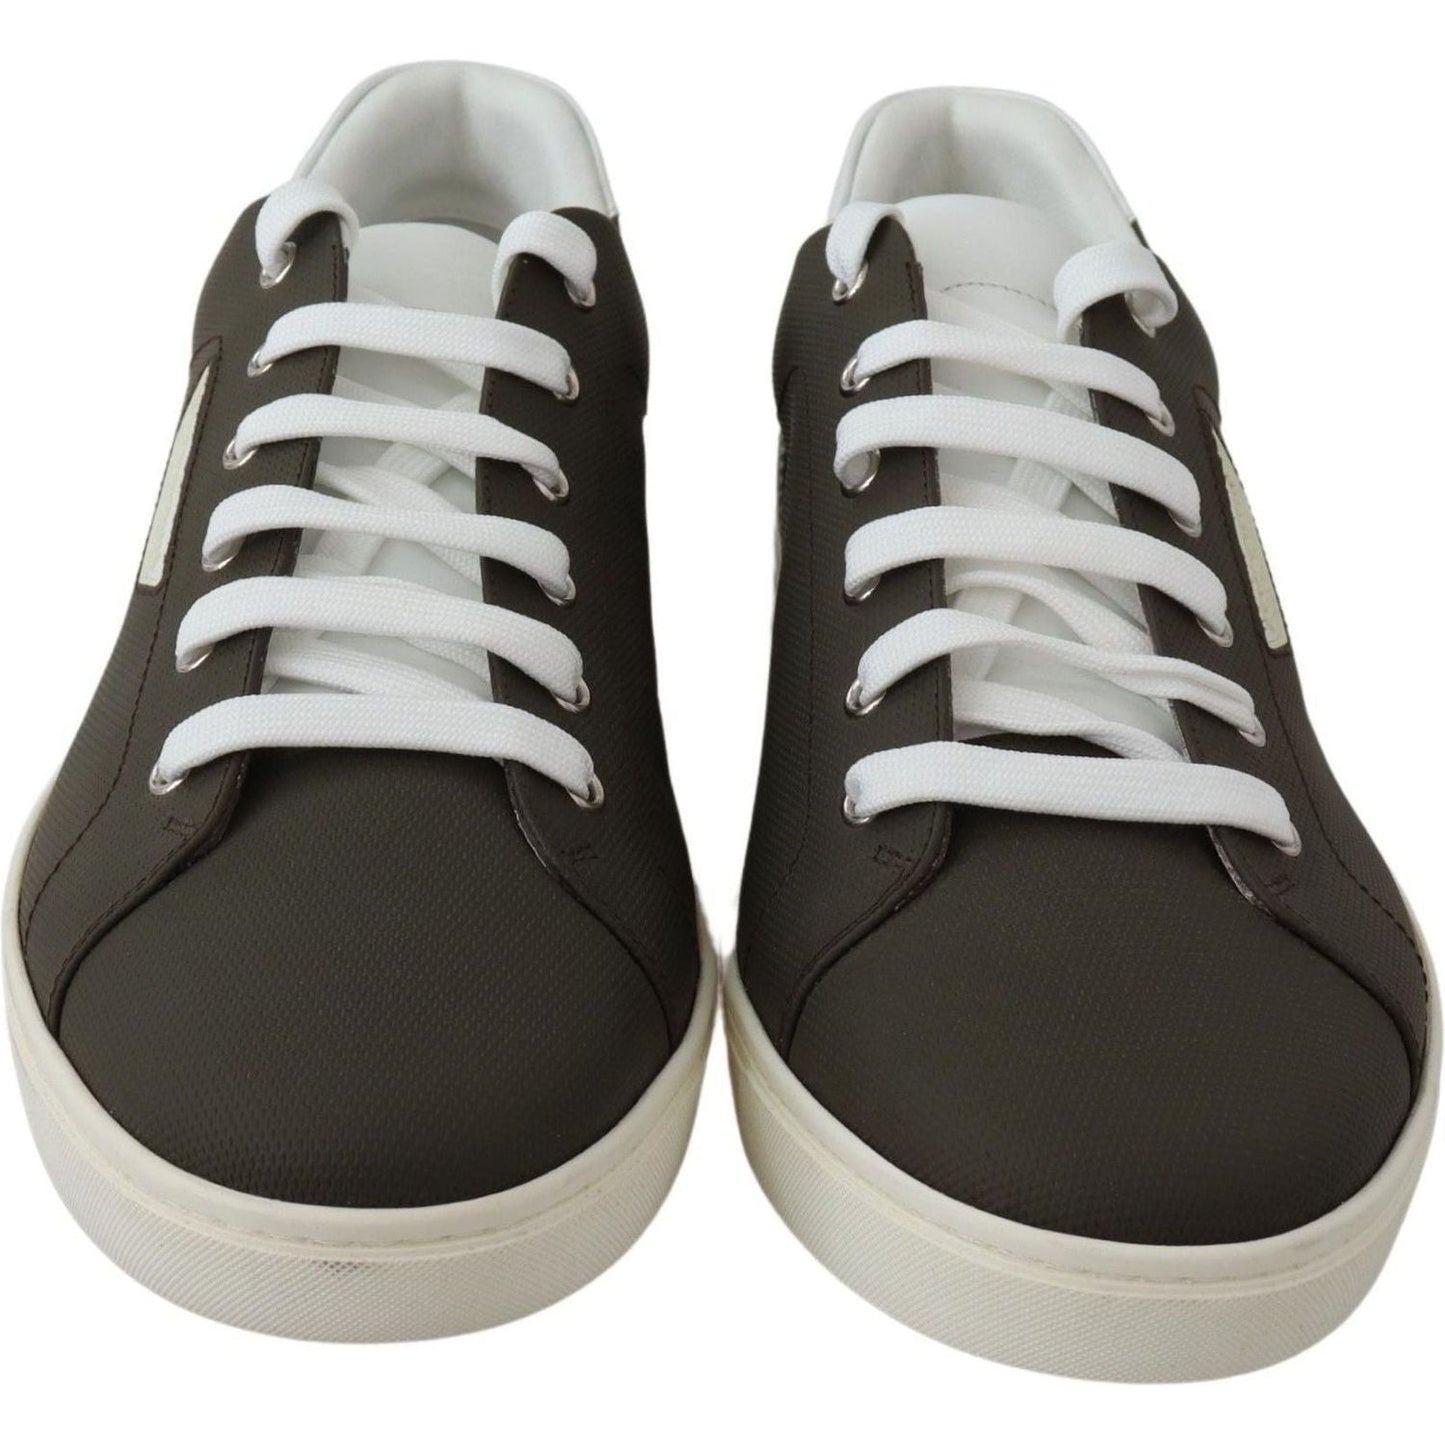 Dolce & Gabbana Sleek White Leather Low Top Sneakers white-green-leather-low-top-sneakers-shoes